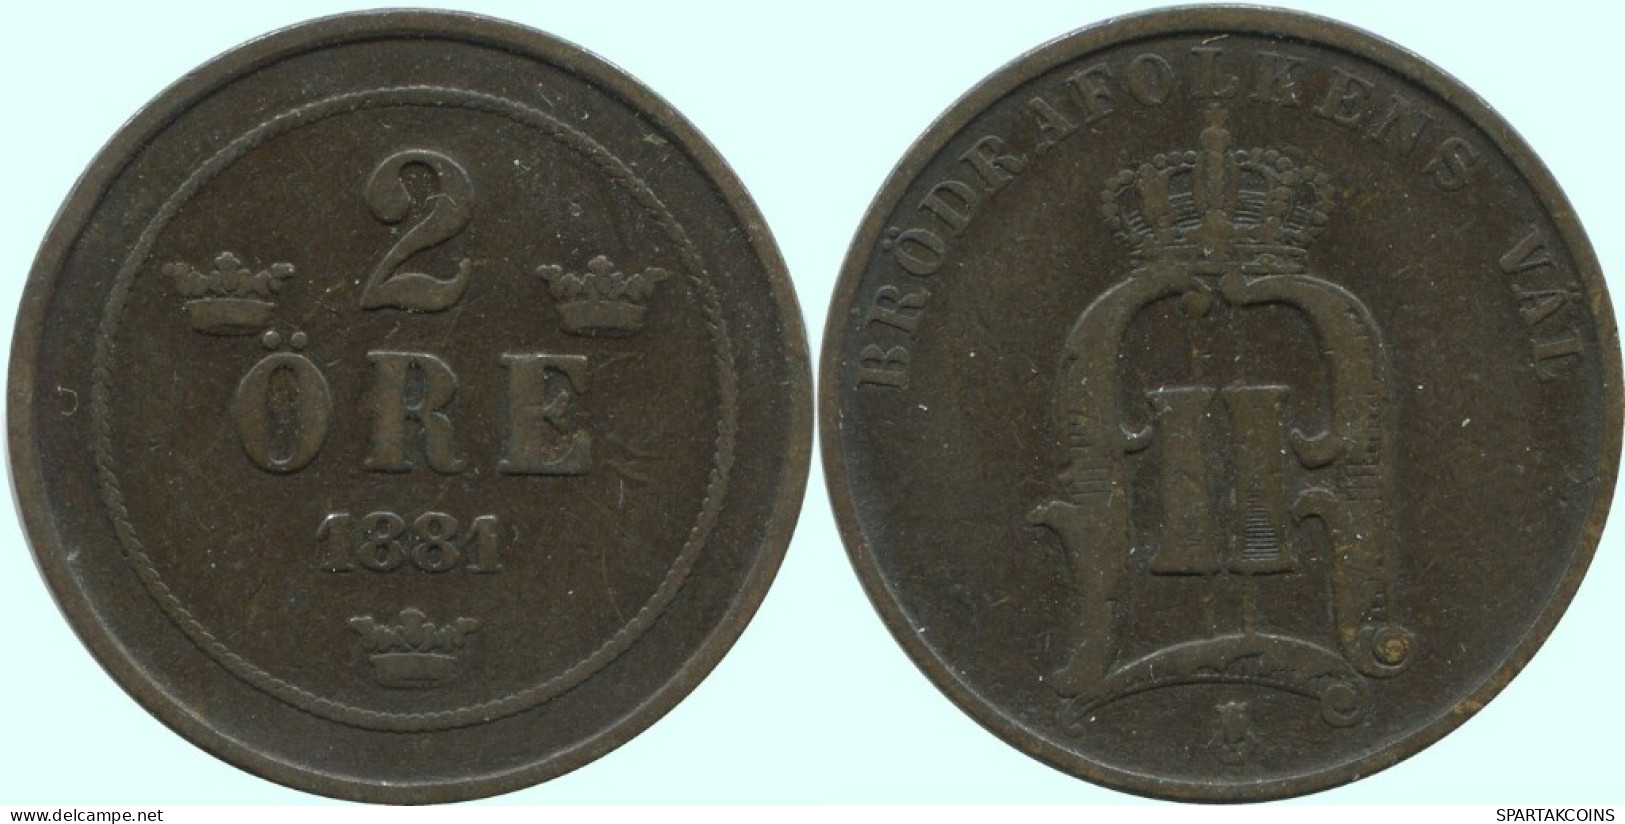 2 ORE 1881 SWEDEN Coin #AC924.2.U.A - Sweden